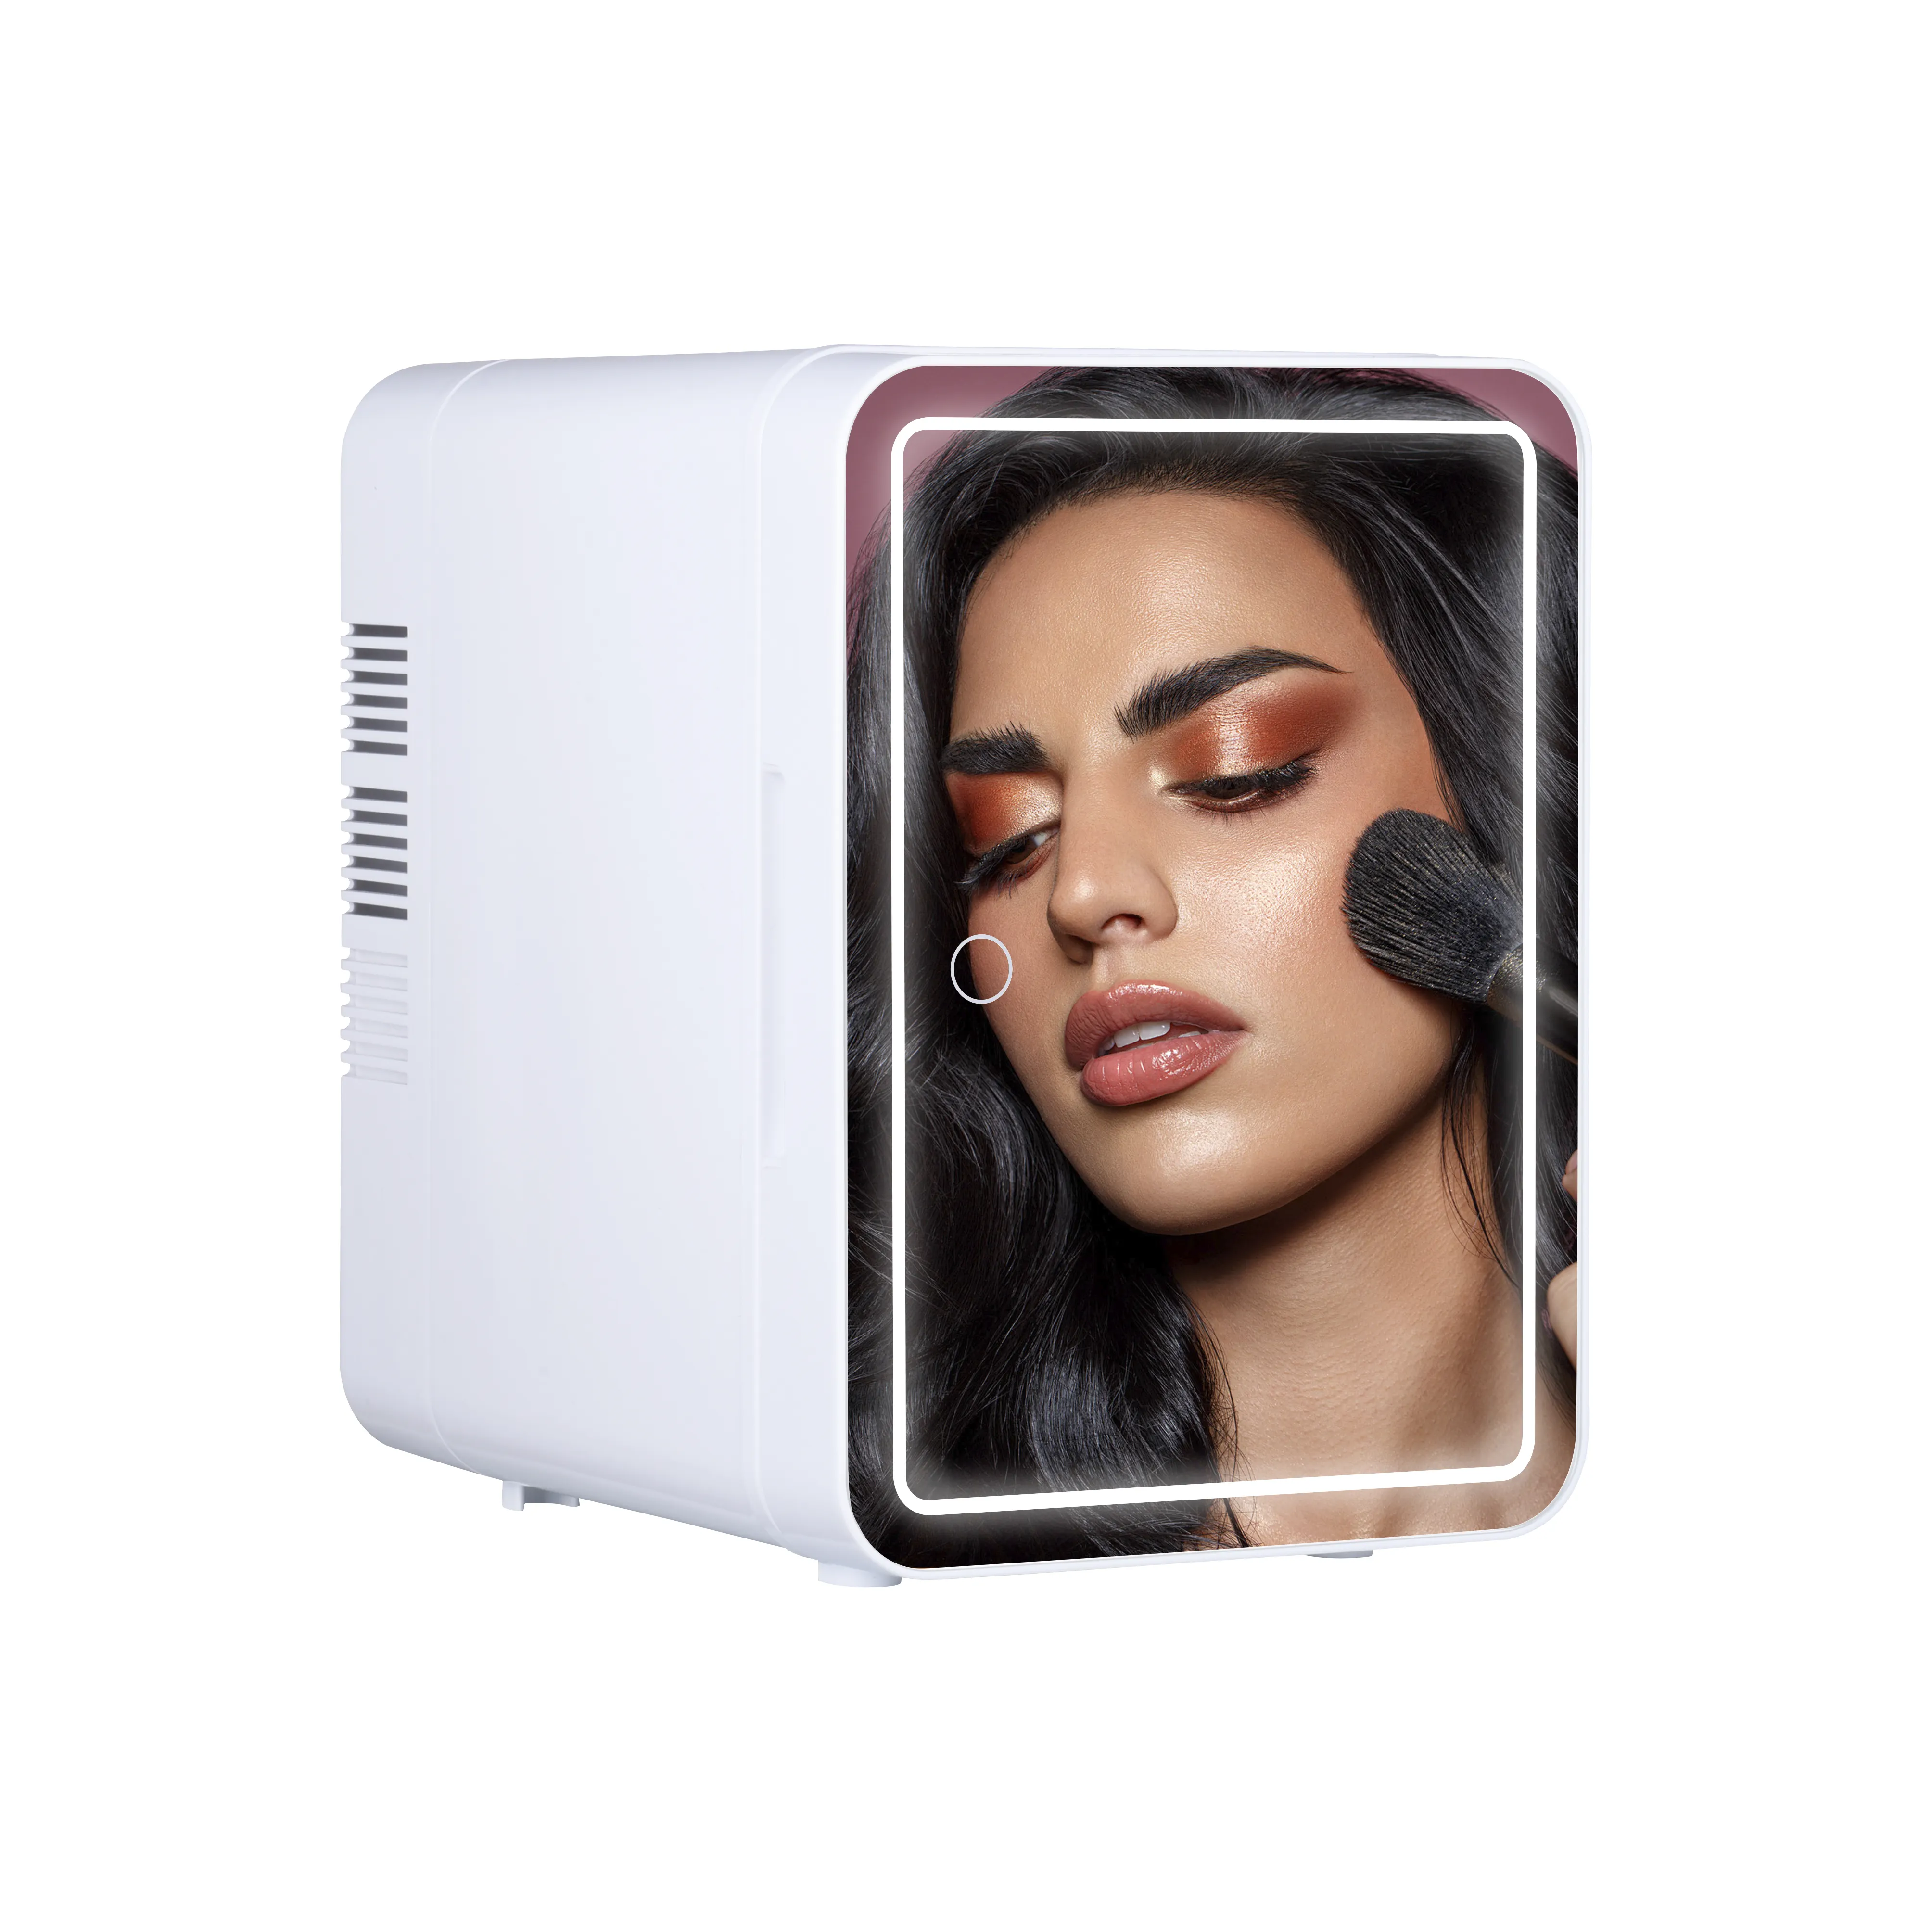 Hot Selling 4L Portable Makeup Beauty Cosmetic Fridge Mini Single Door Refrigerator With Mirror LED Light